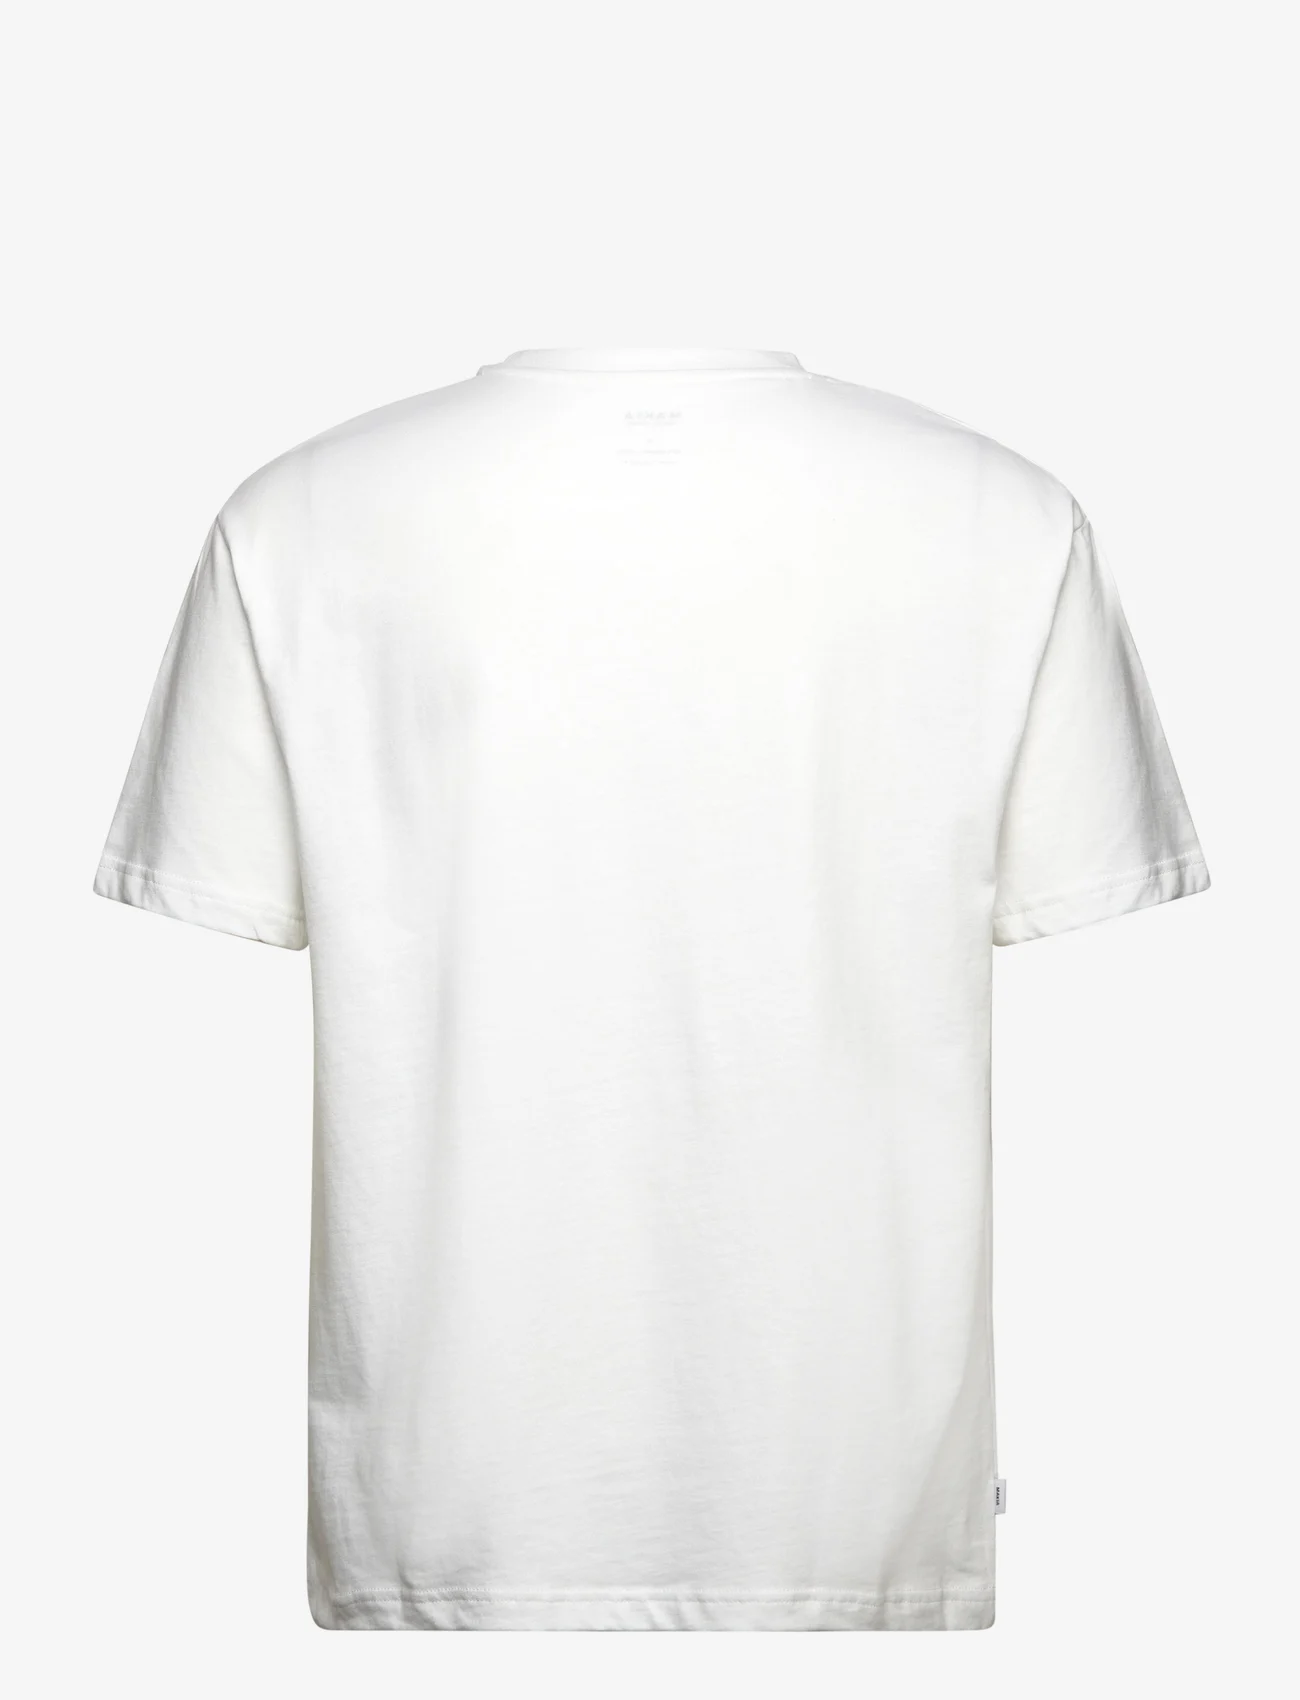 Makia - Lungs t-shirt - t-shirts - white - 1